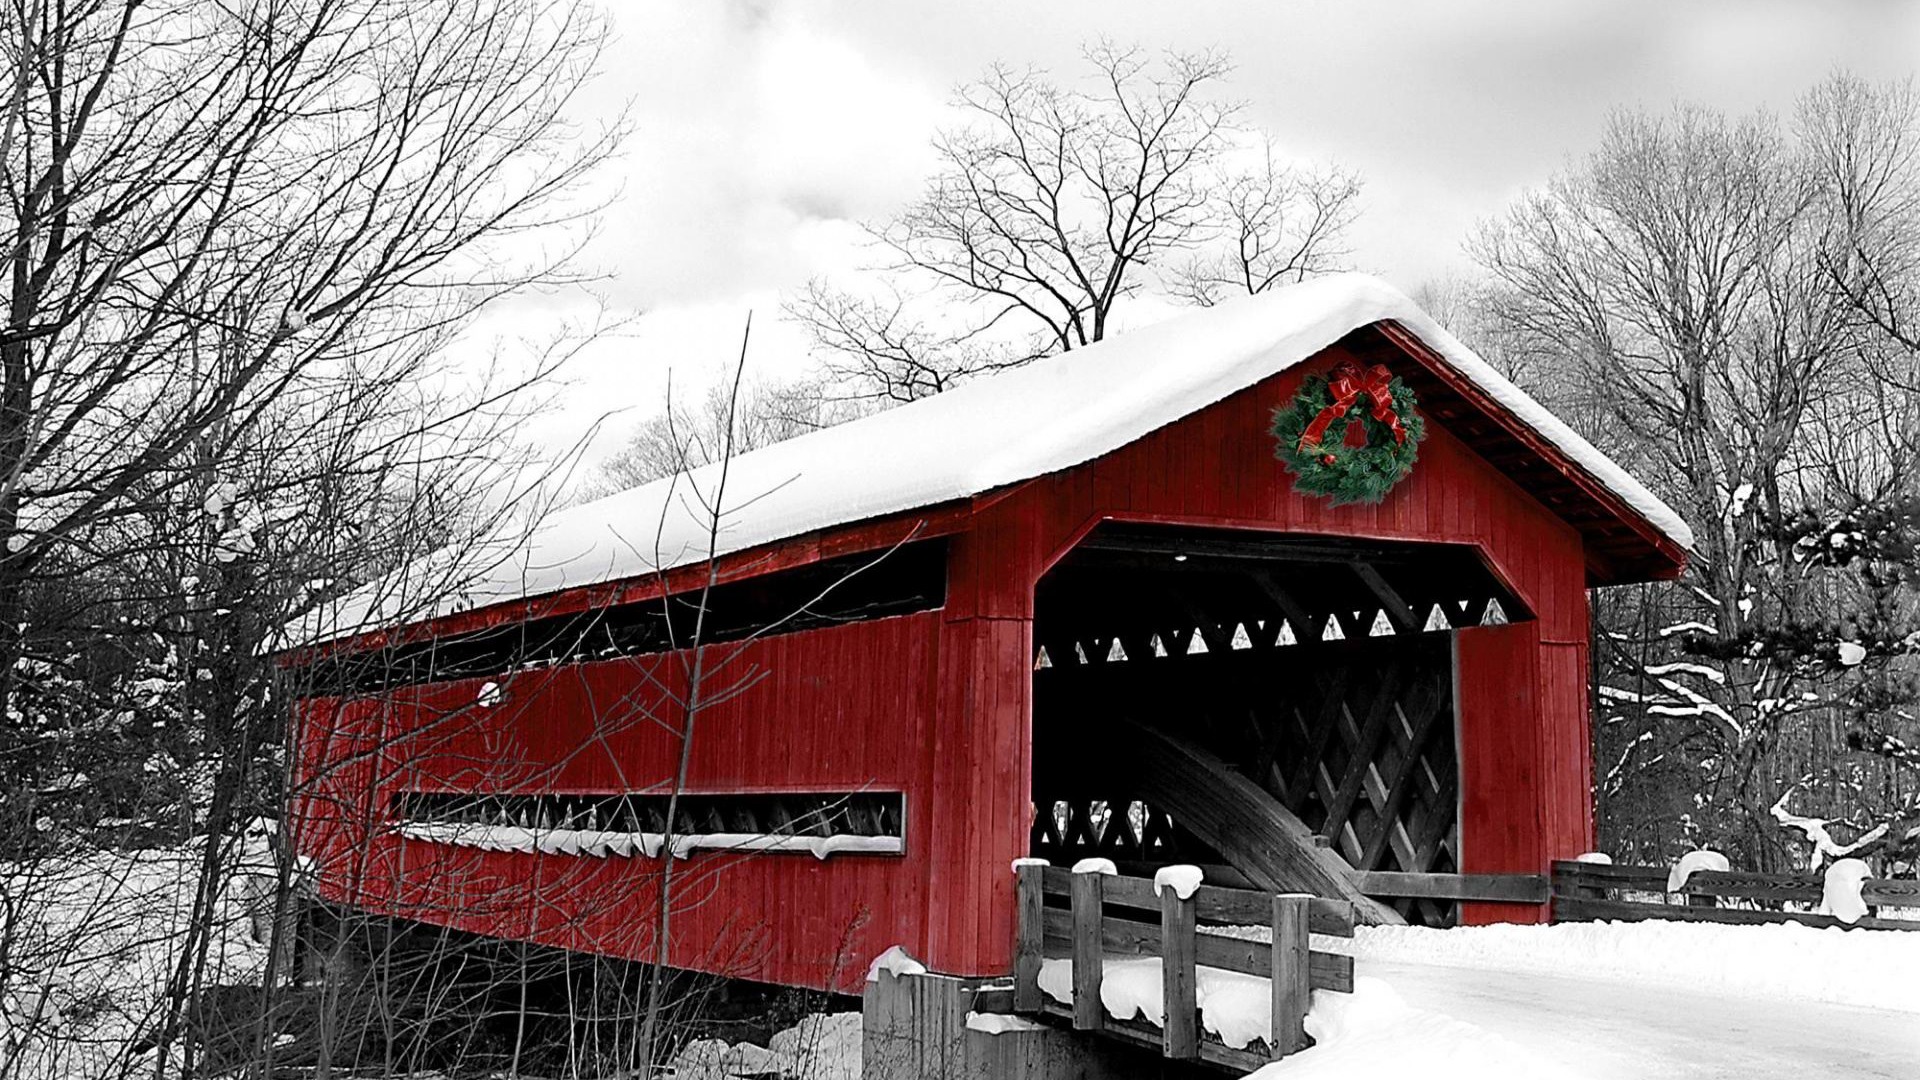 man made, covered bridge, snow, wreath, bridges